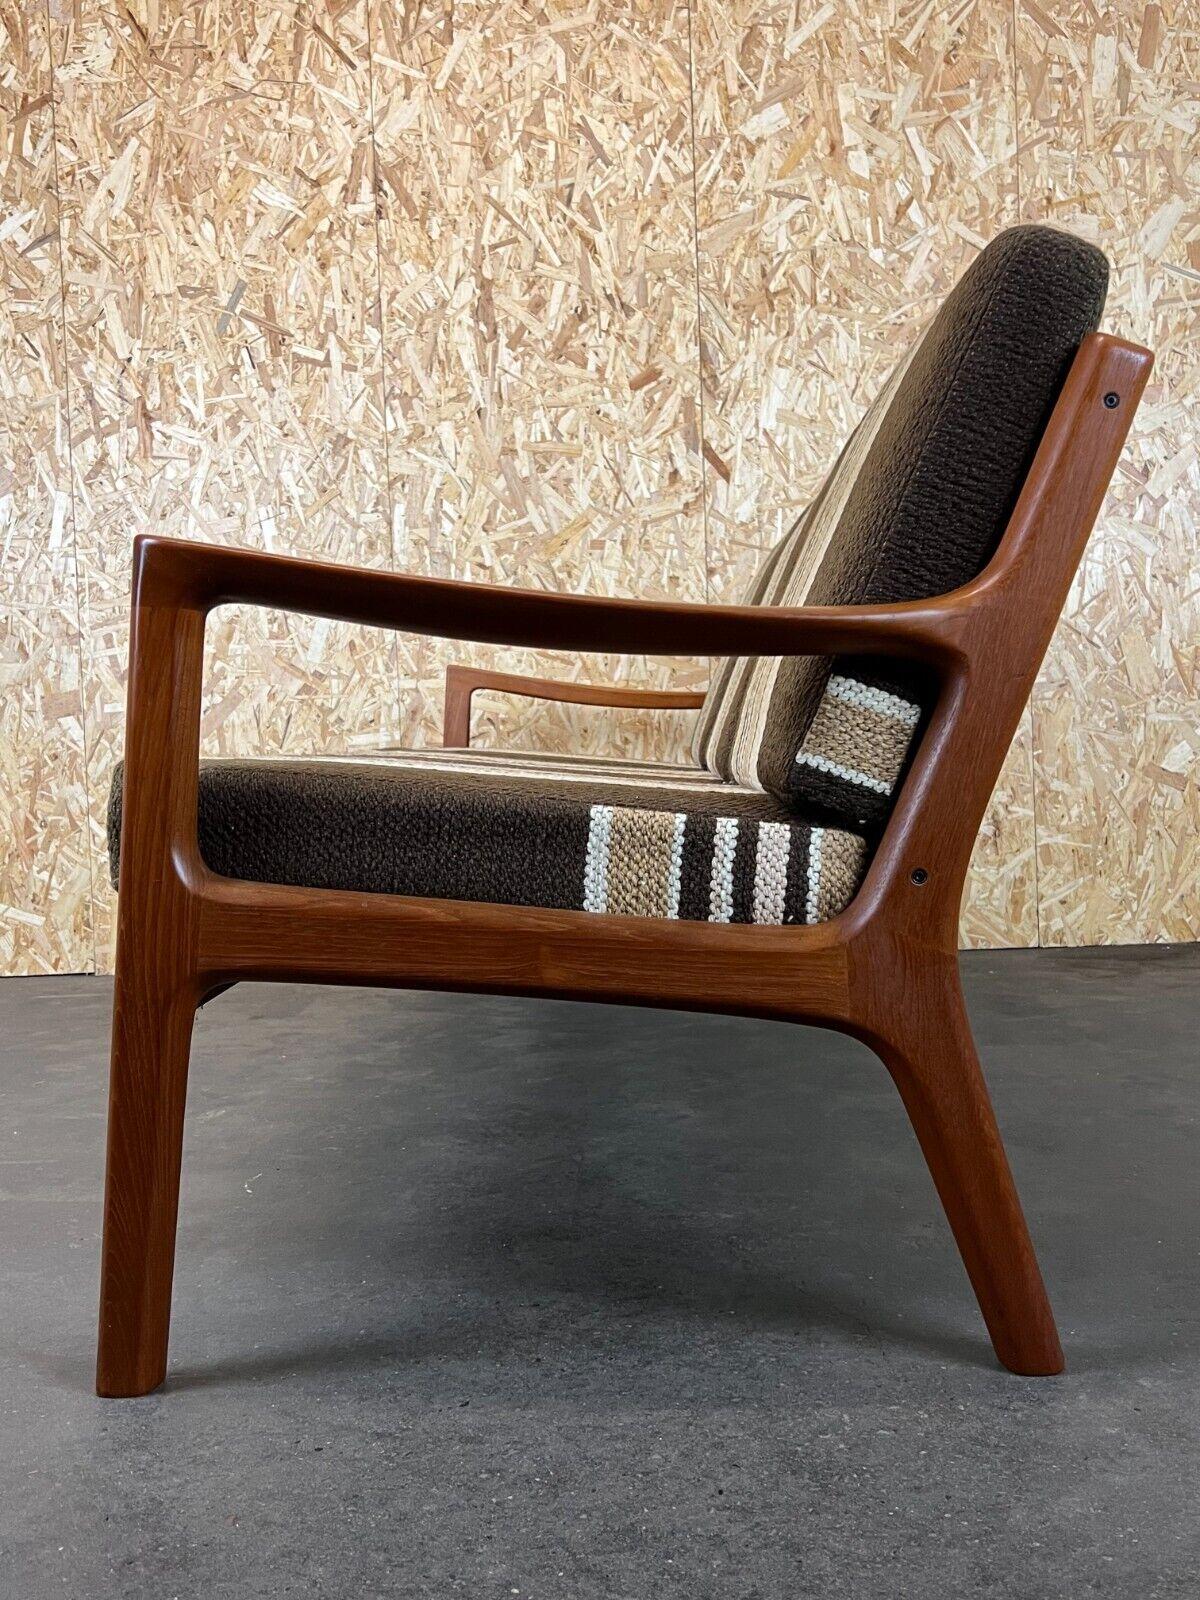 60s 70s Teak 3 Seater Sofa Couch Ole Wanscher Cado France & Son Danish Design For Sale 5